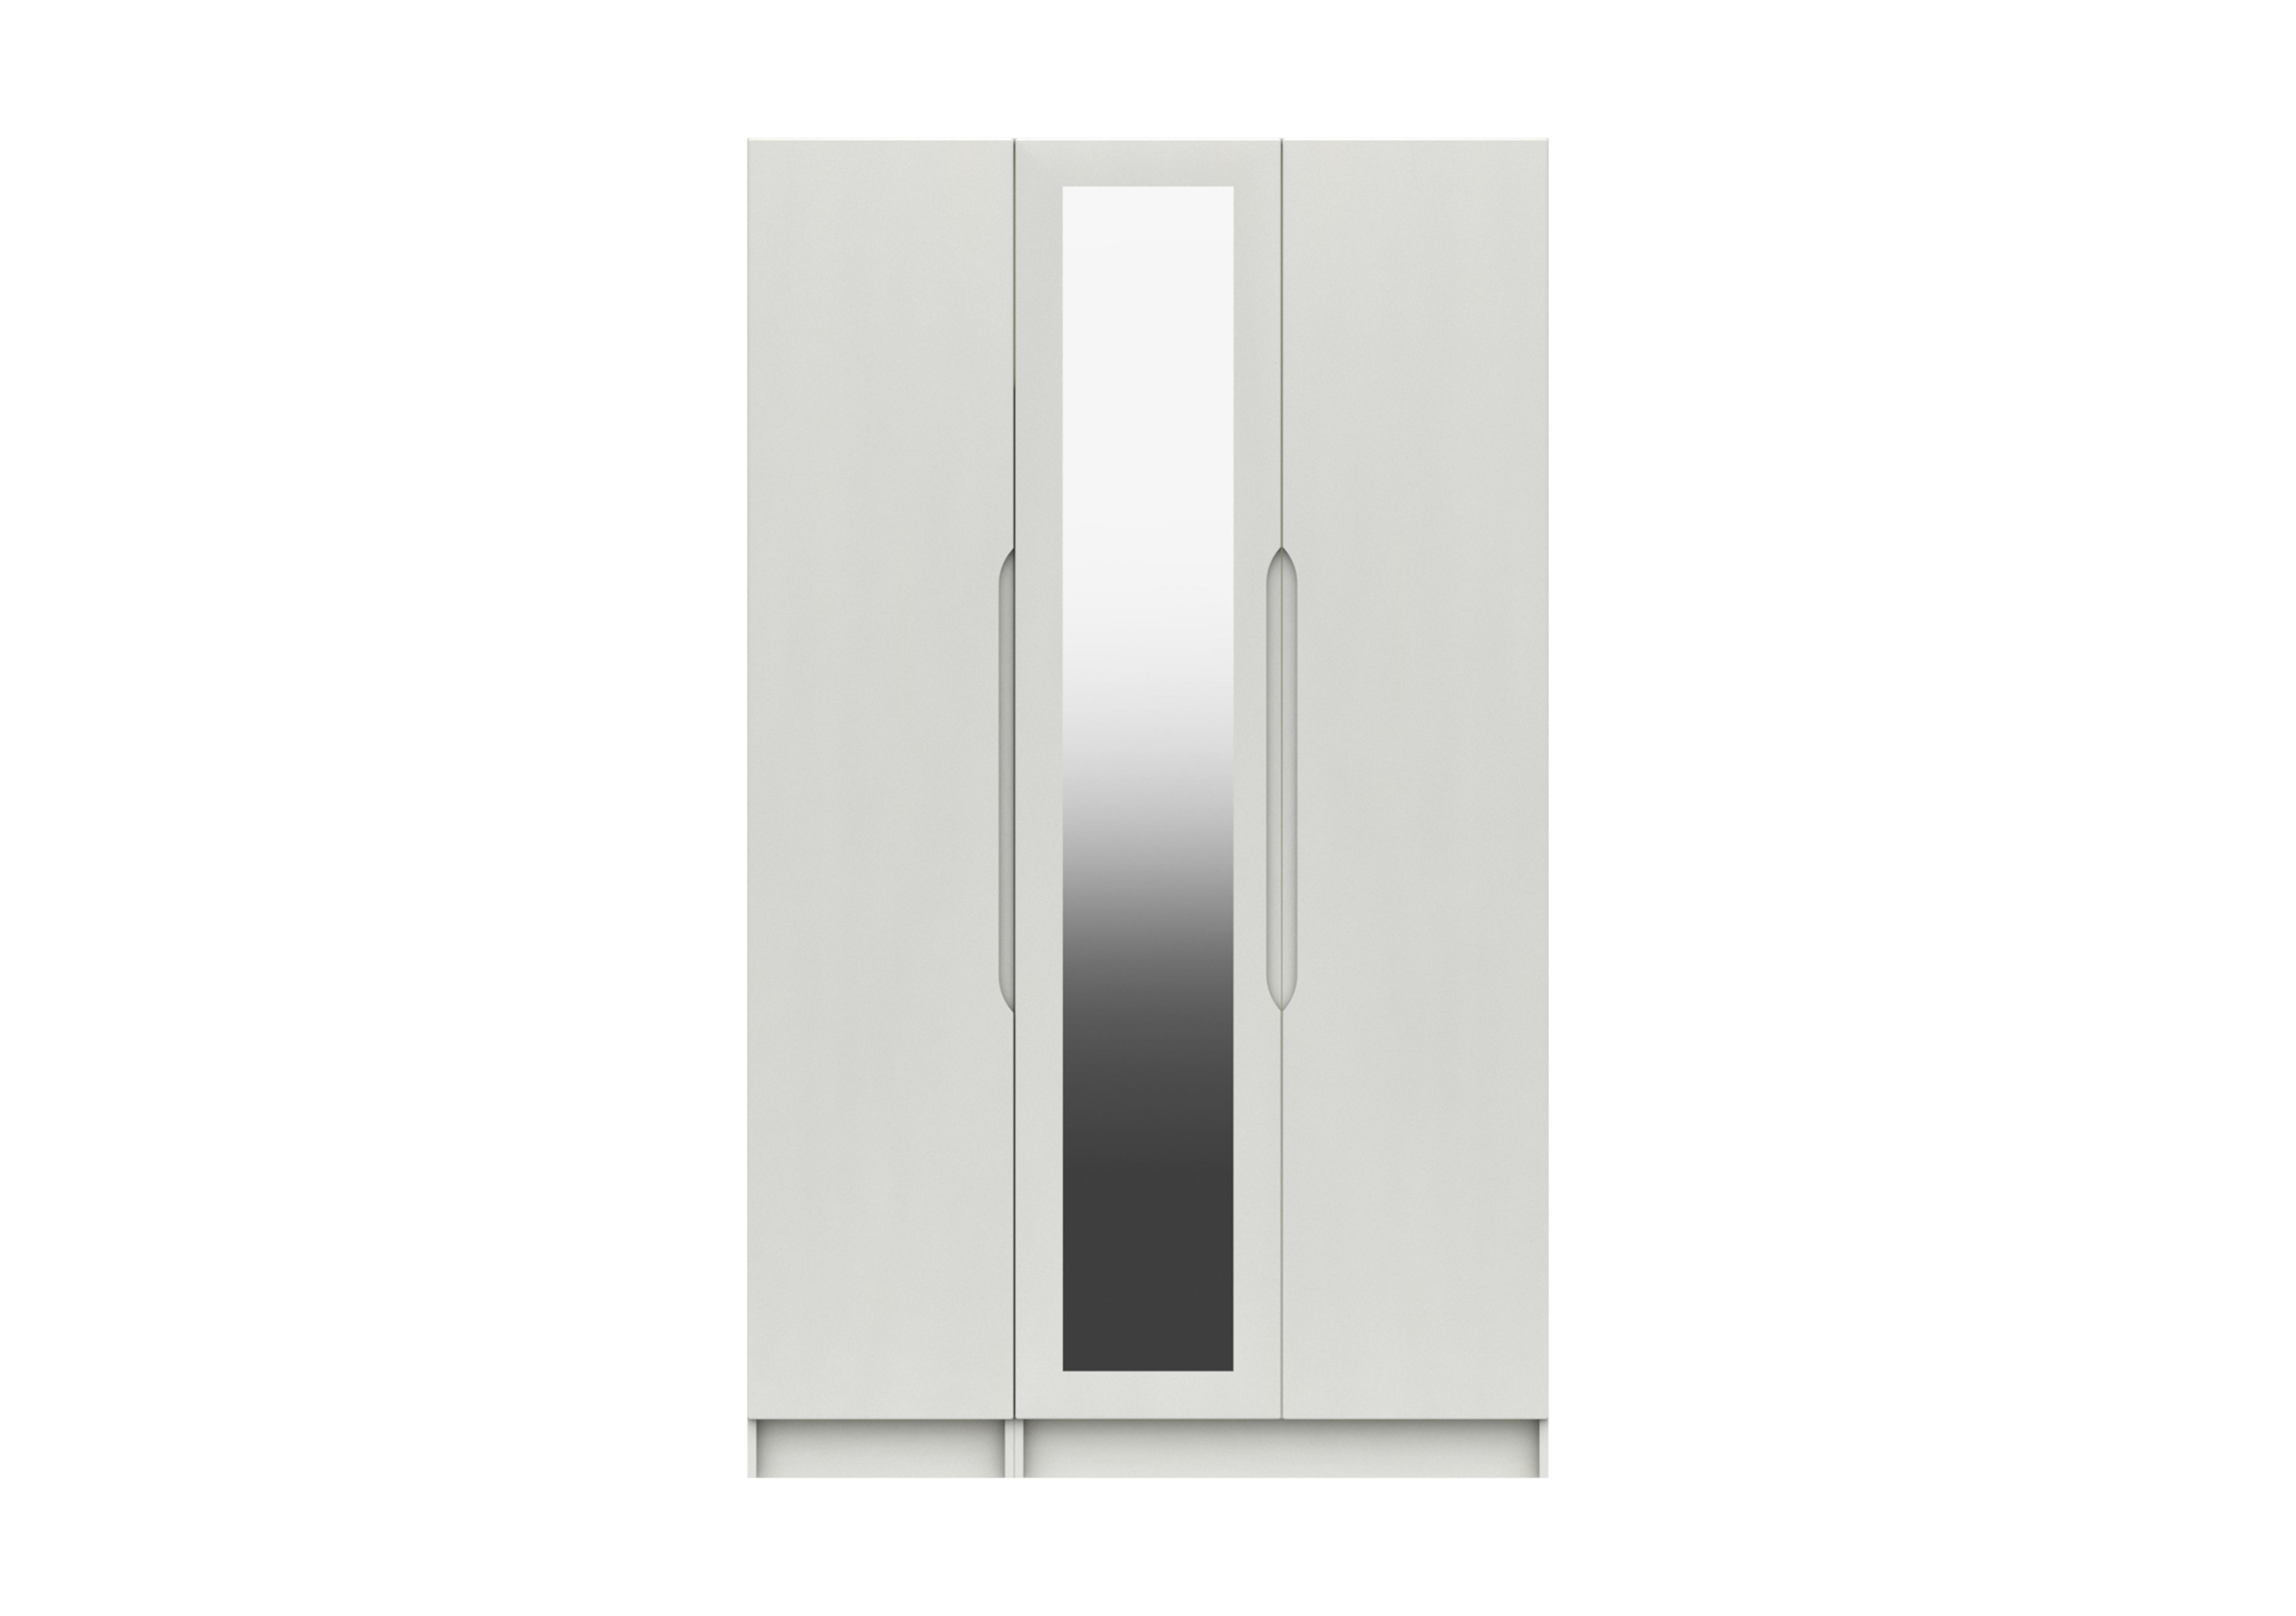 St Pancras 3 Door Tall Wardrobe with Mirror in White Gloss on Furniture Village